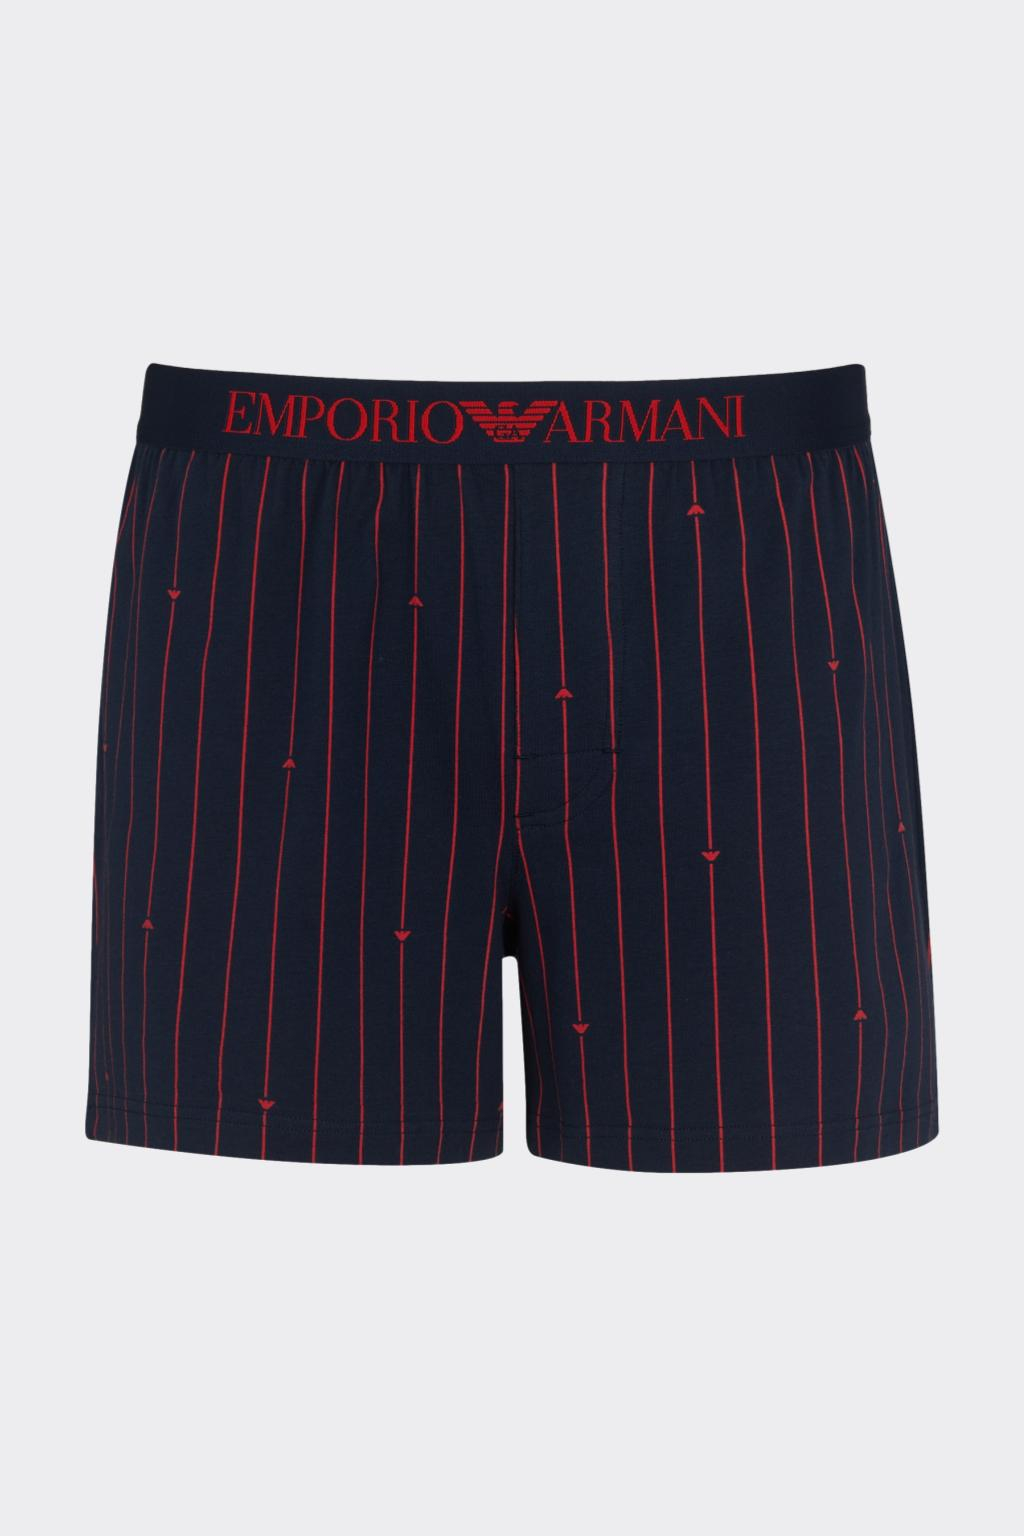 Emporio Armani Underwear Emporio Armani trenýrky - černé Velikost: S